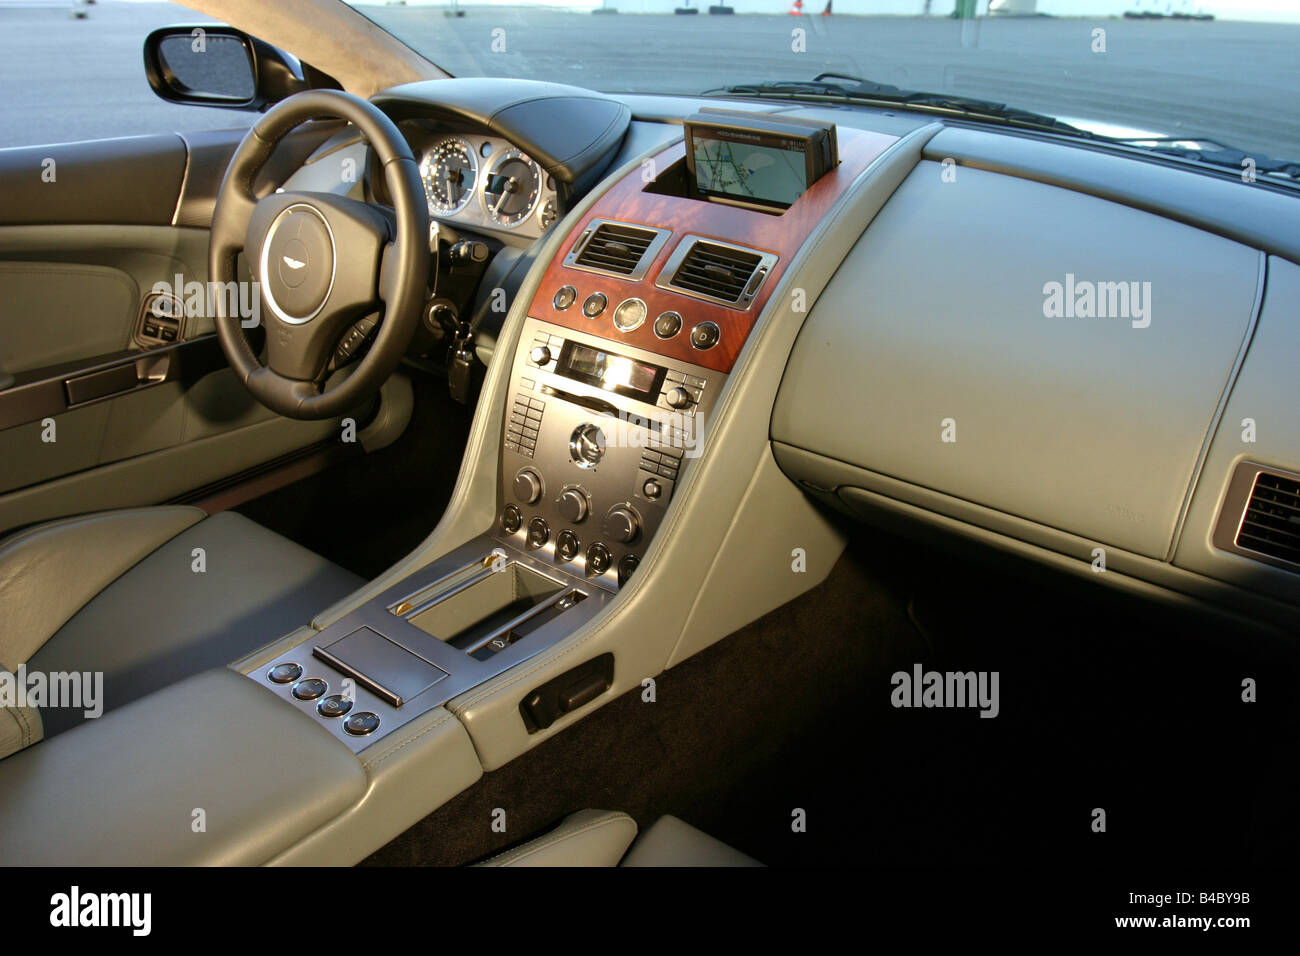 Aston Martin Cockpit Interior Stockfotos Aston Martin